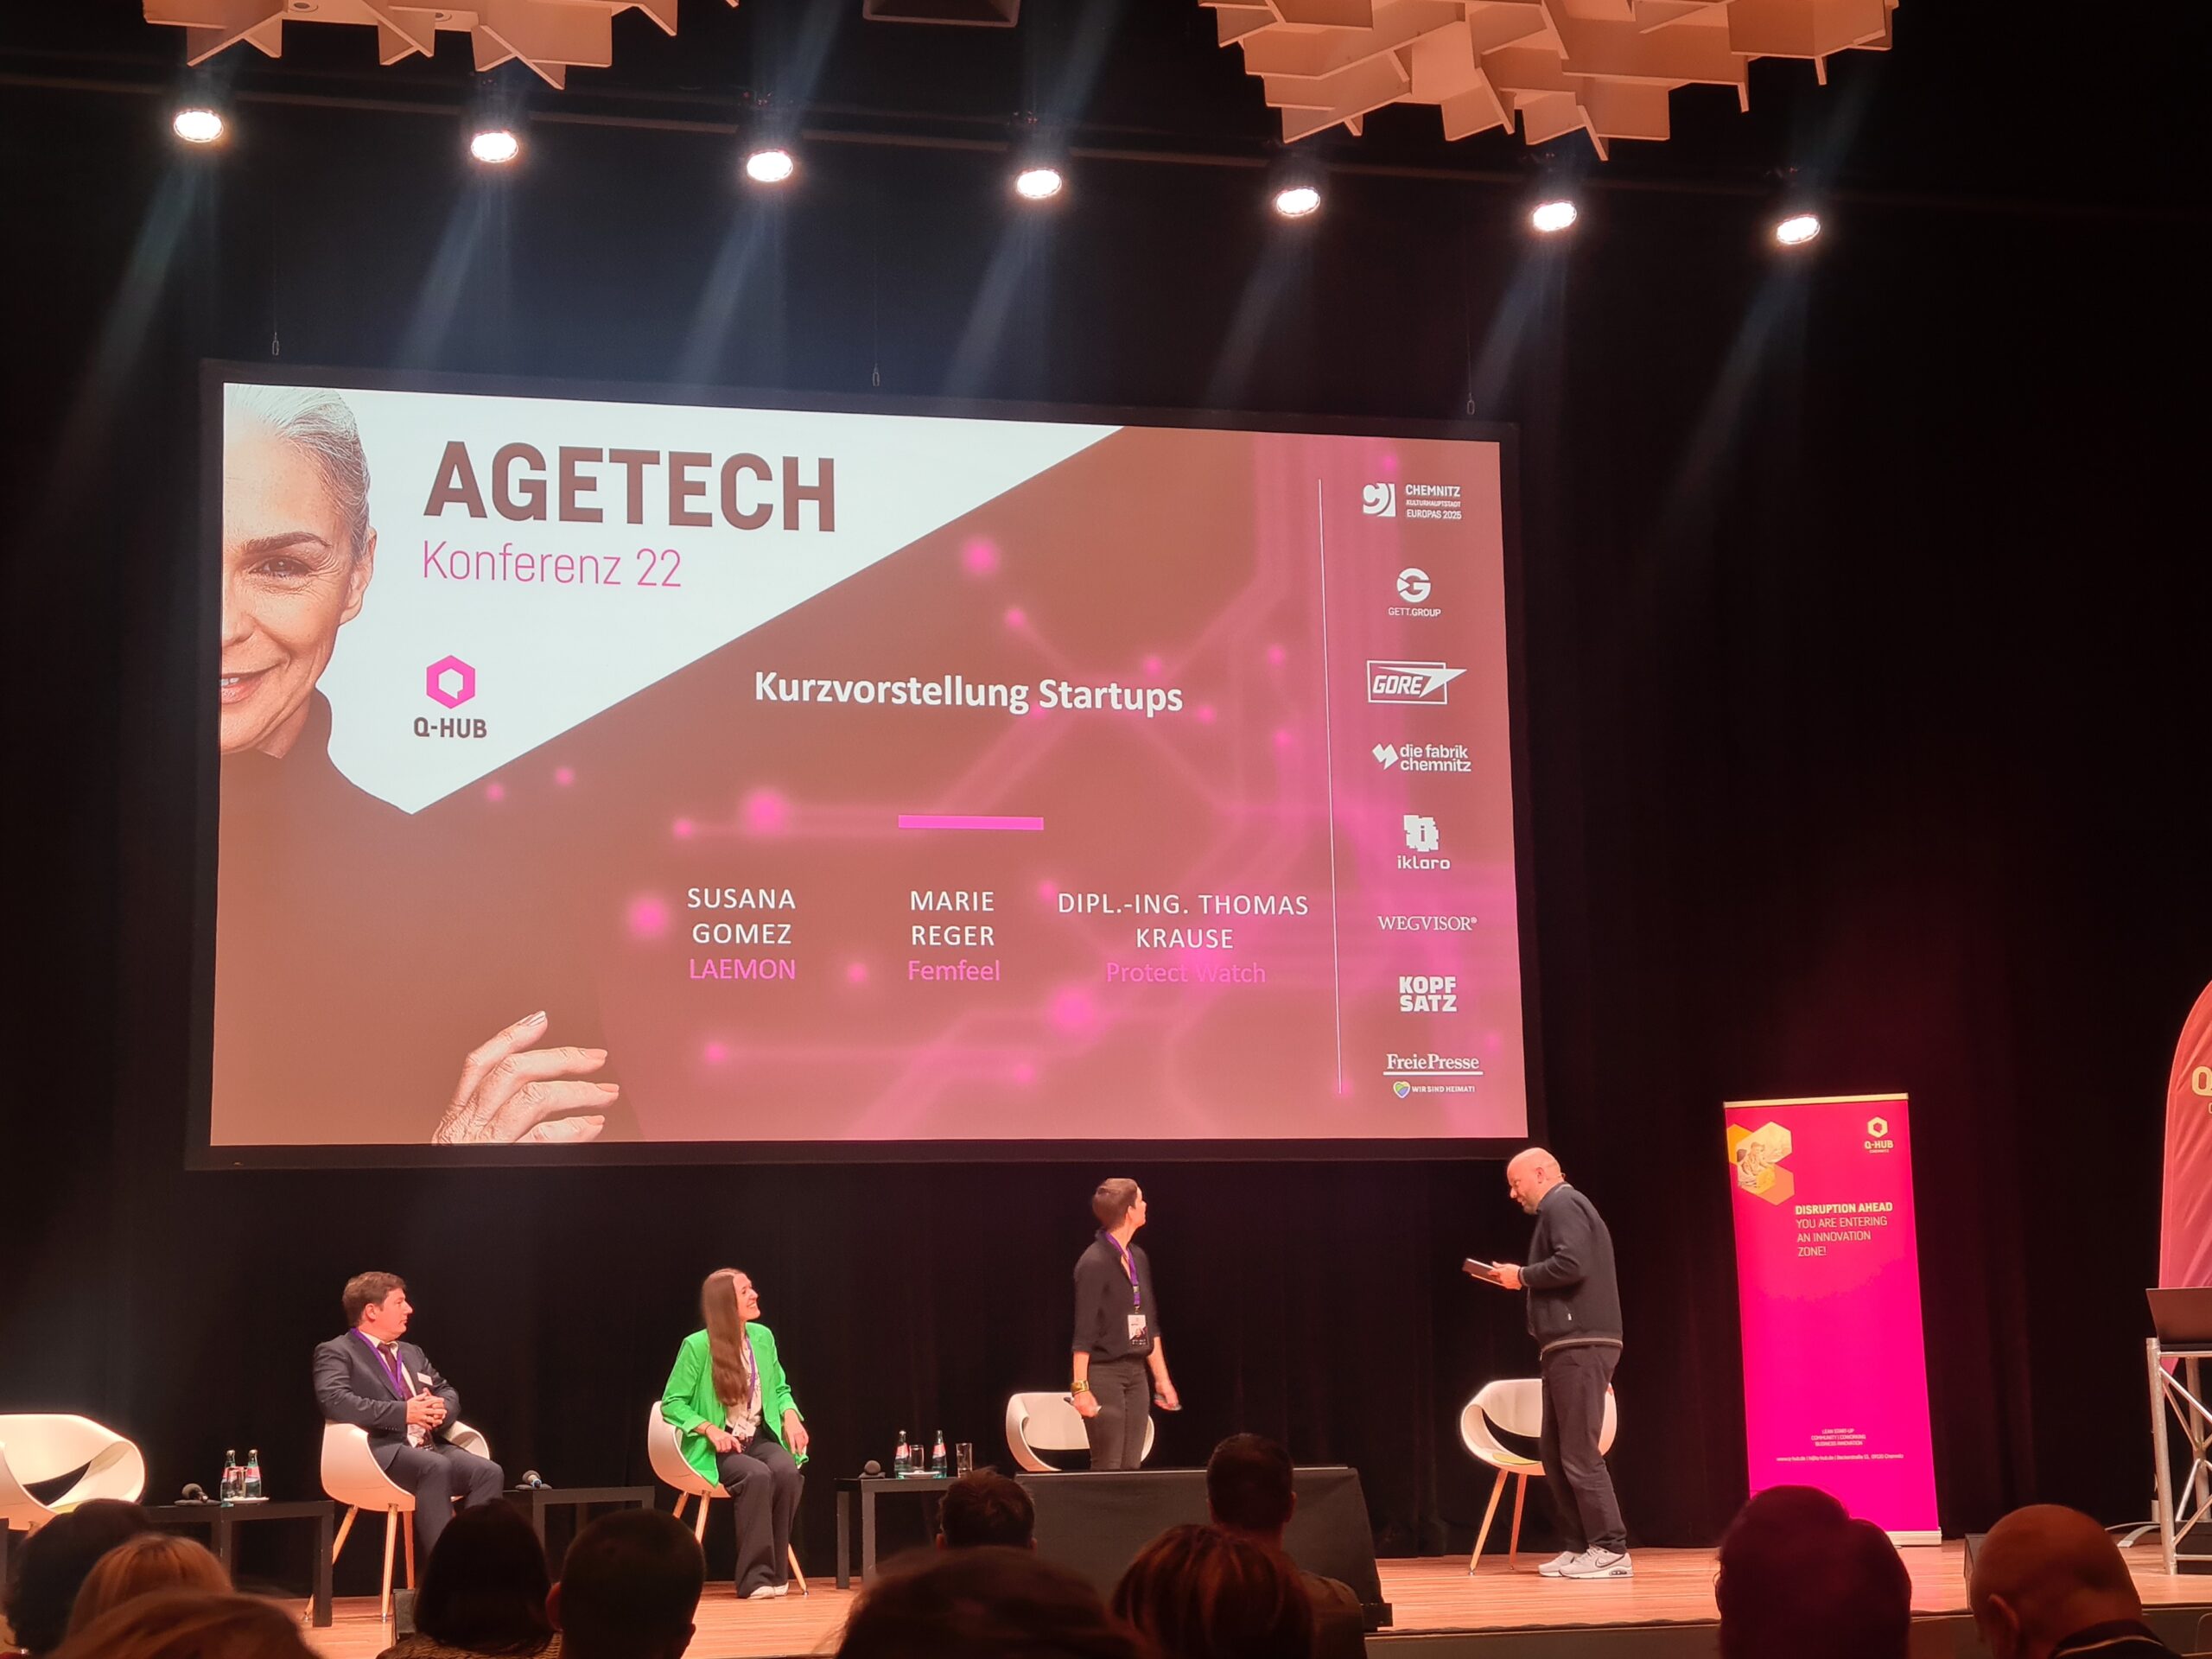 QHub-AgeTech-Konferenz-2022-Startups-Laemon-Femfeel-ProtectWatch